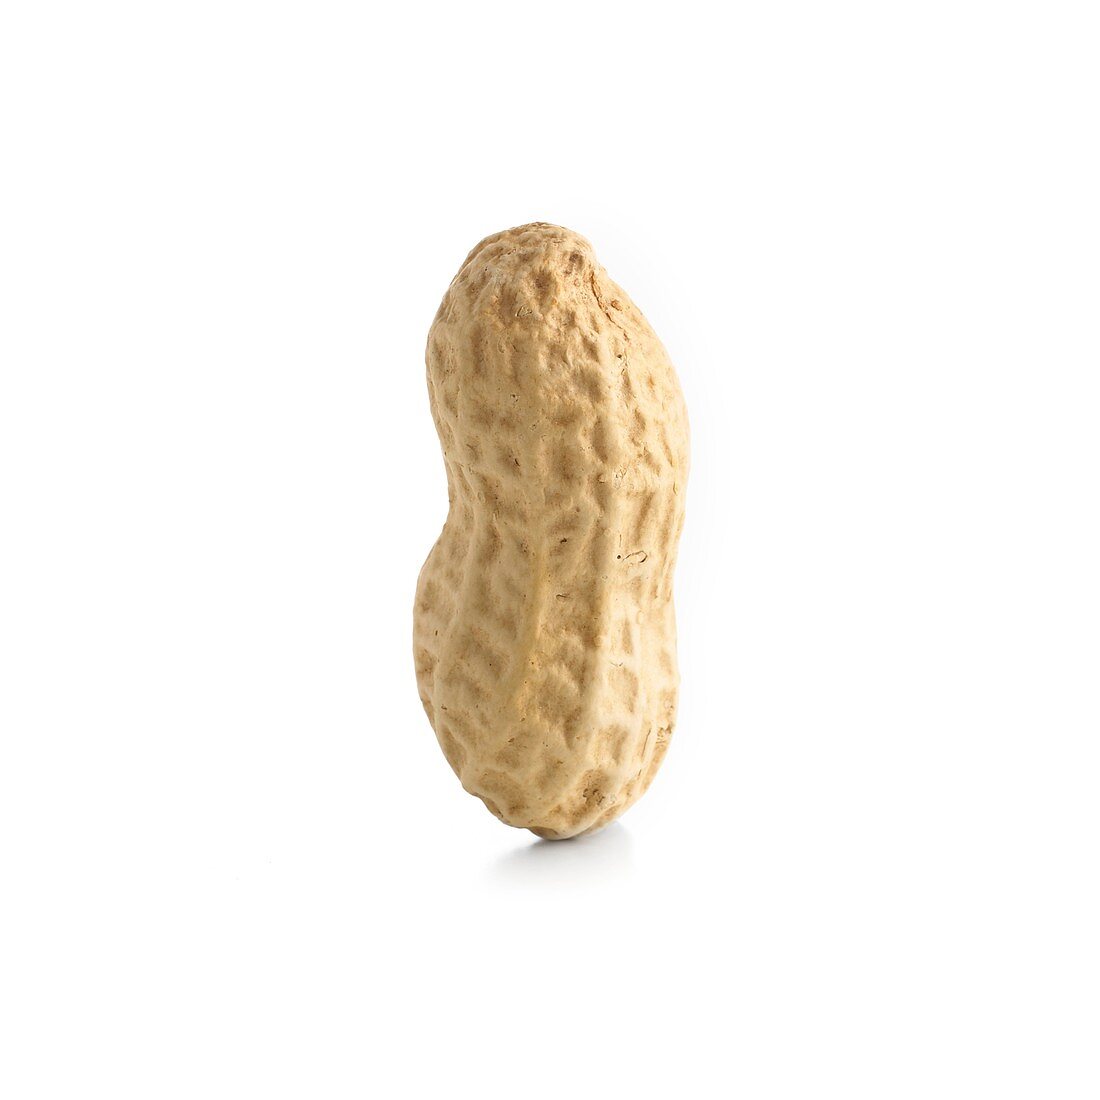 Peanut shell